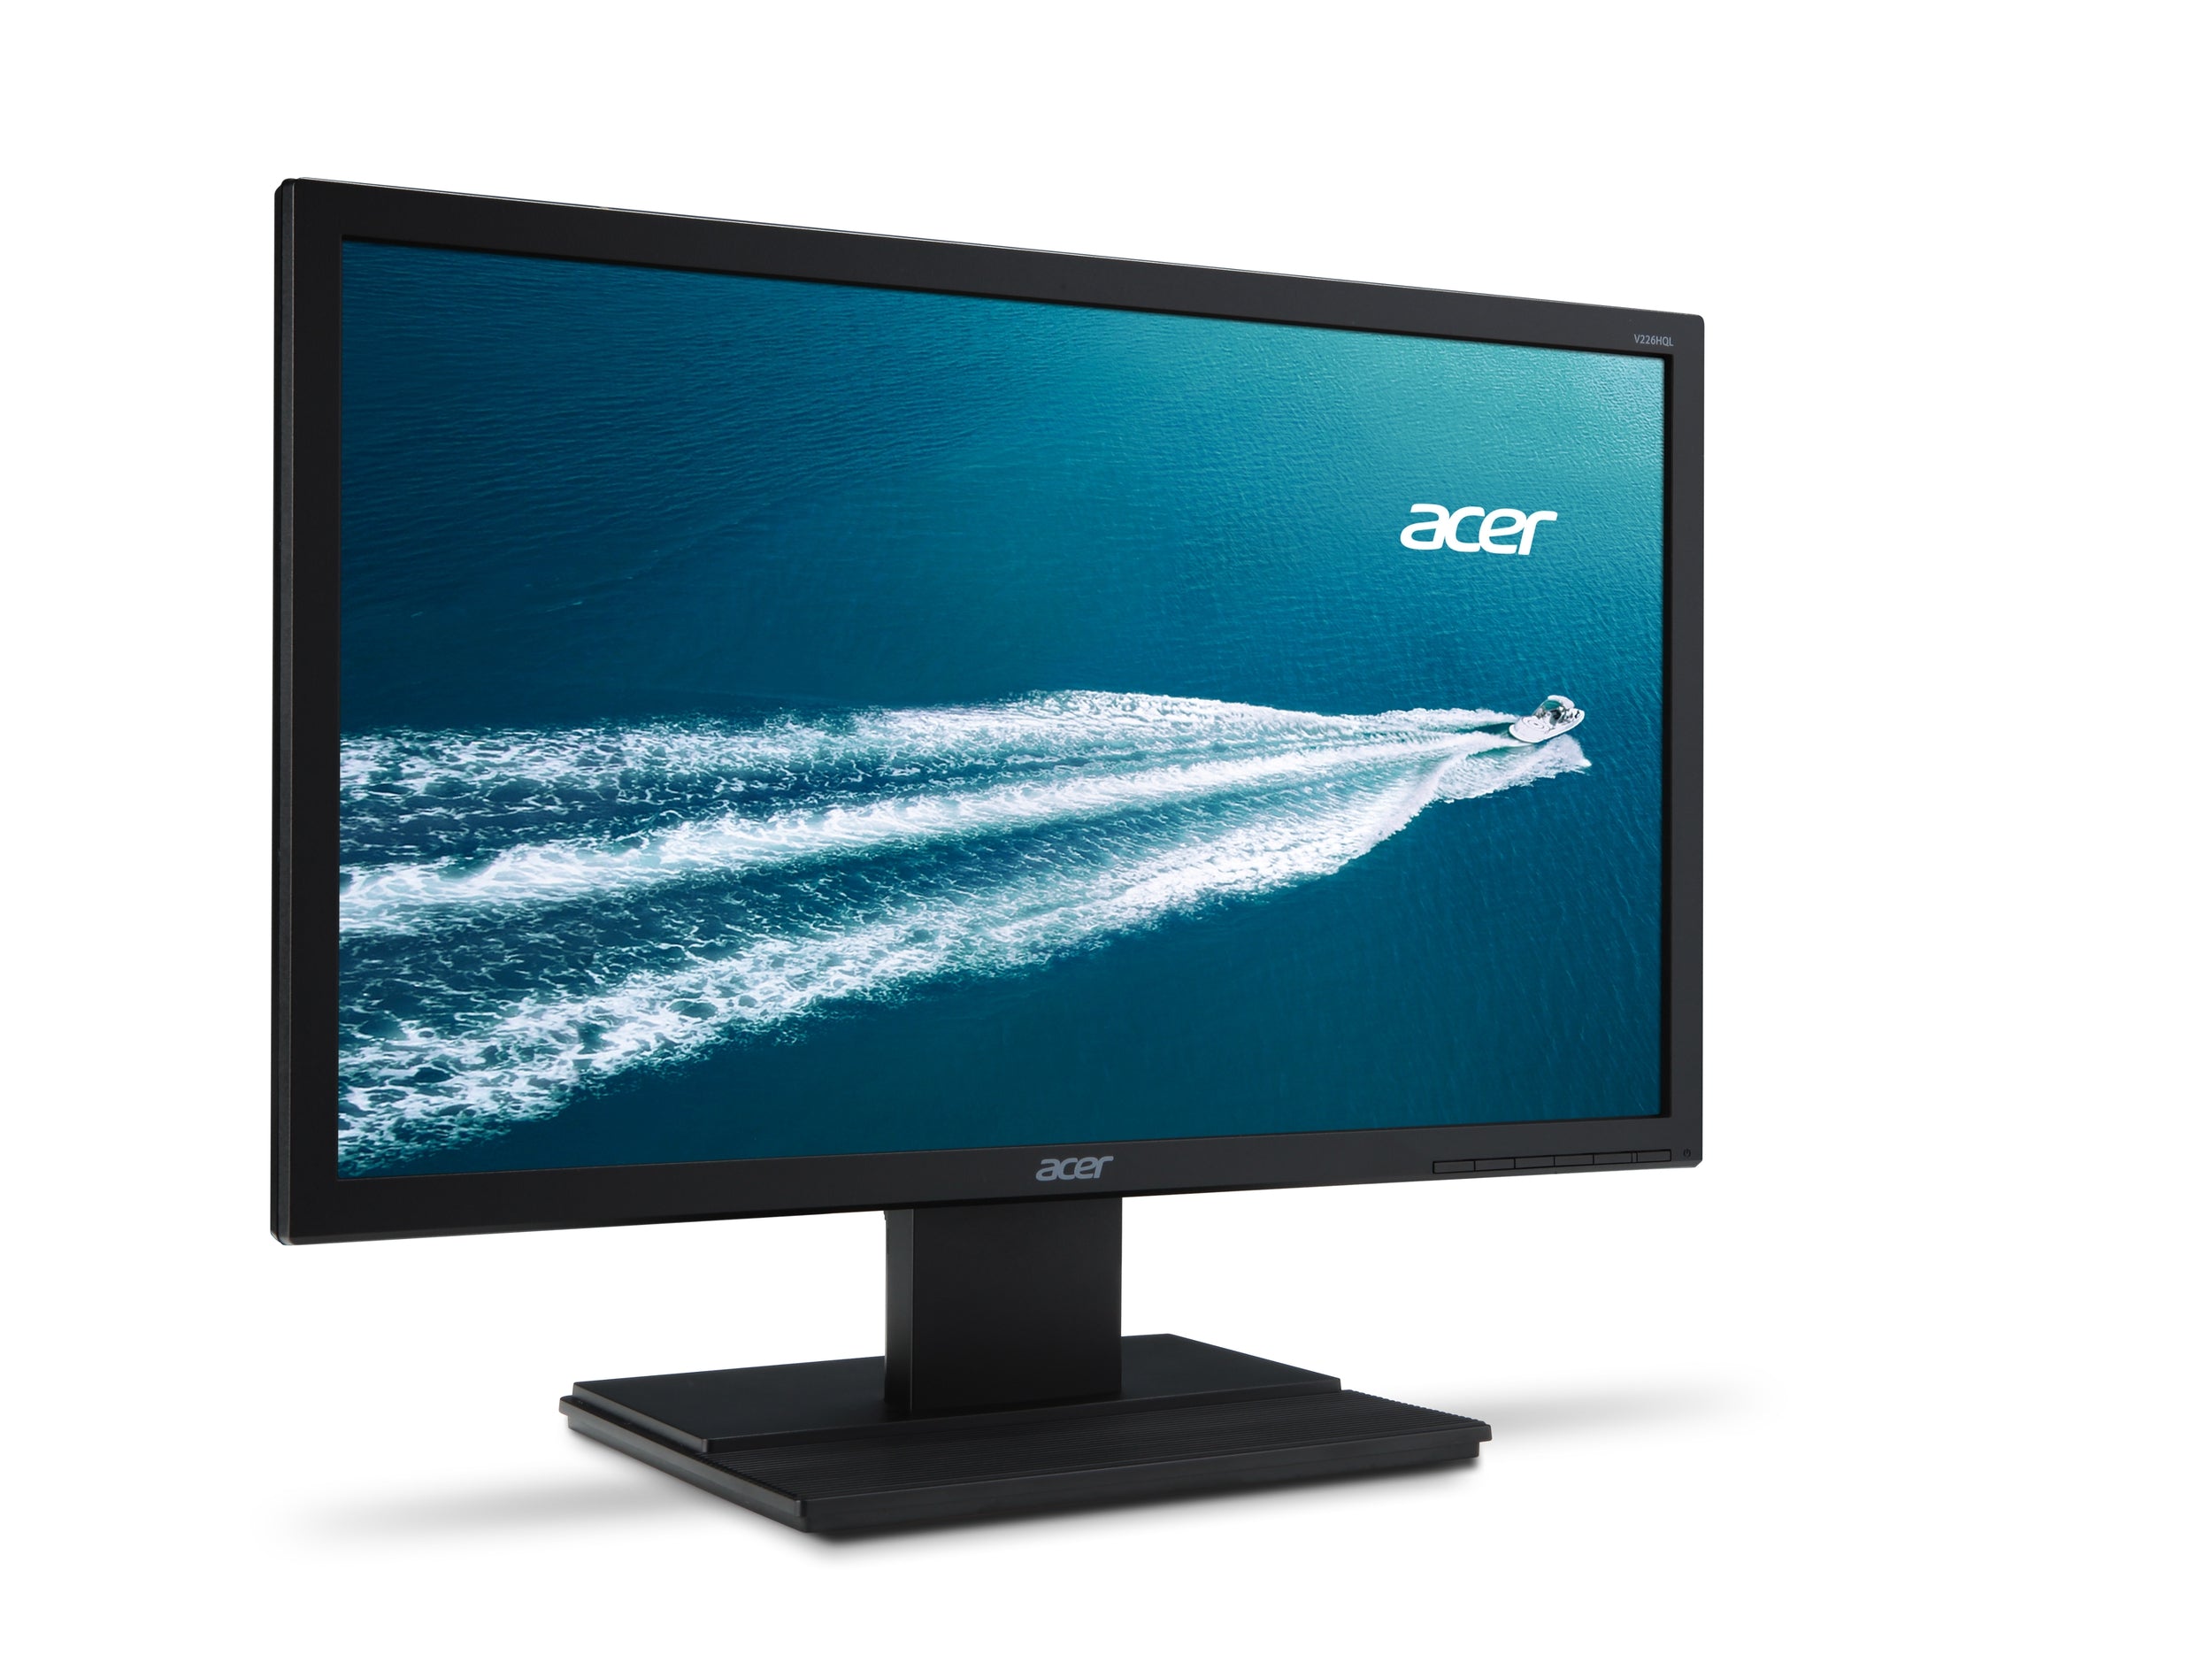 Monitor Acer V226Hql 21.5 Fhd 1920 X 1080 5Ms Hdmi 1; Vga 3 Años De Garantia En Cs/ Bundle.